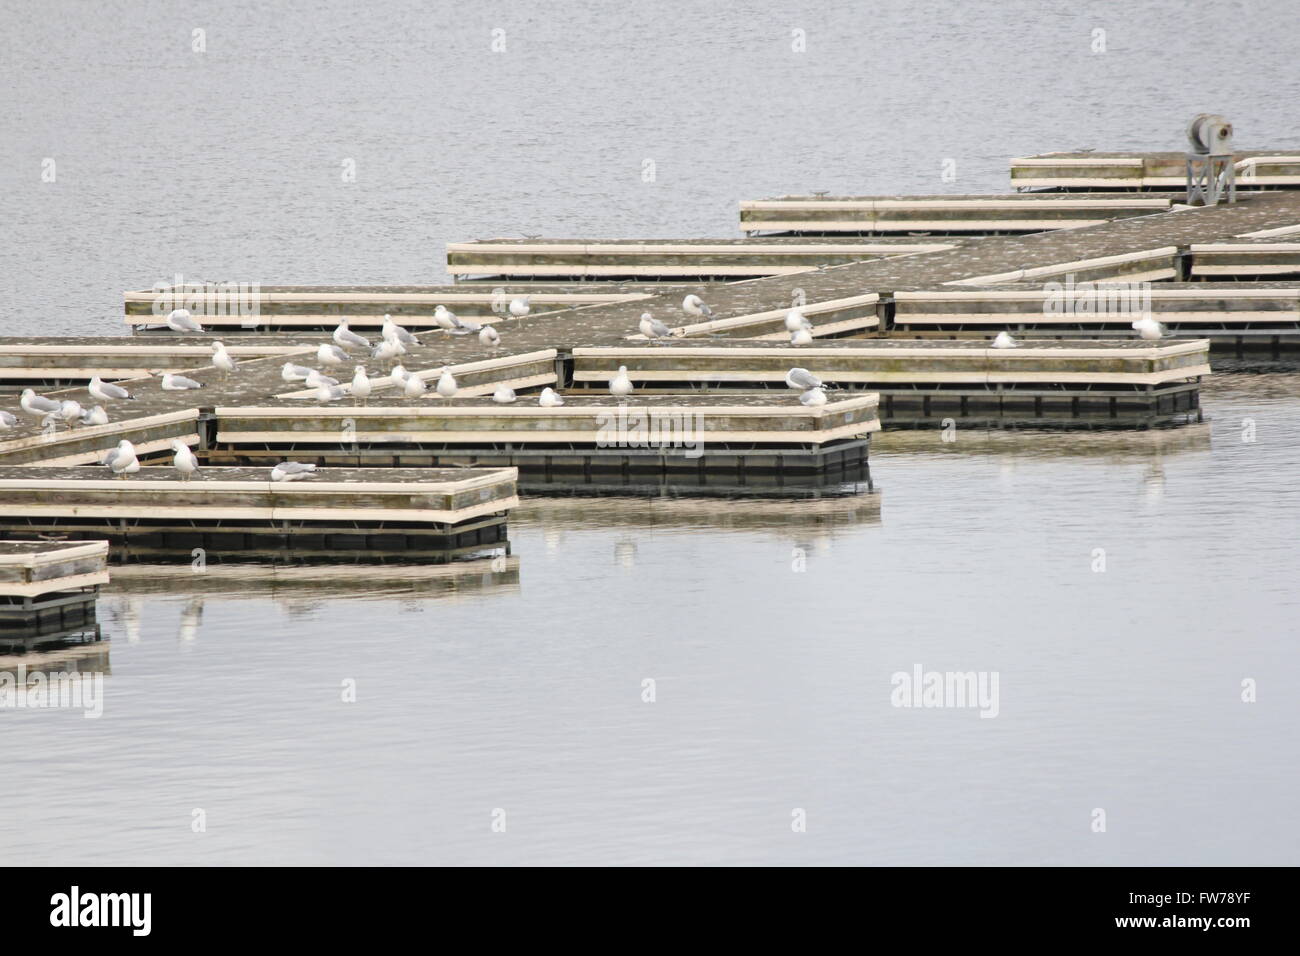 Marina empty of boats during the early winter season in North America  Boat slips empty. Stock Photo